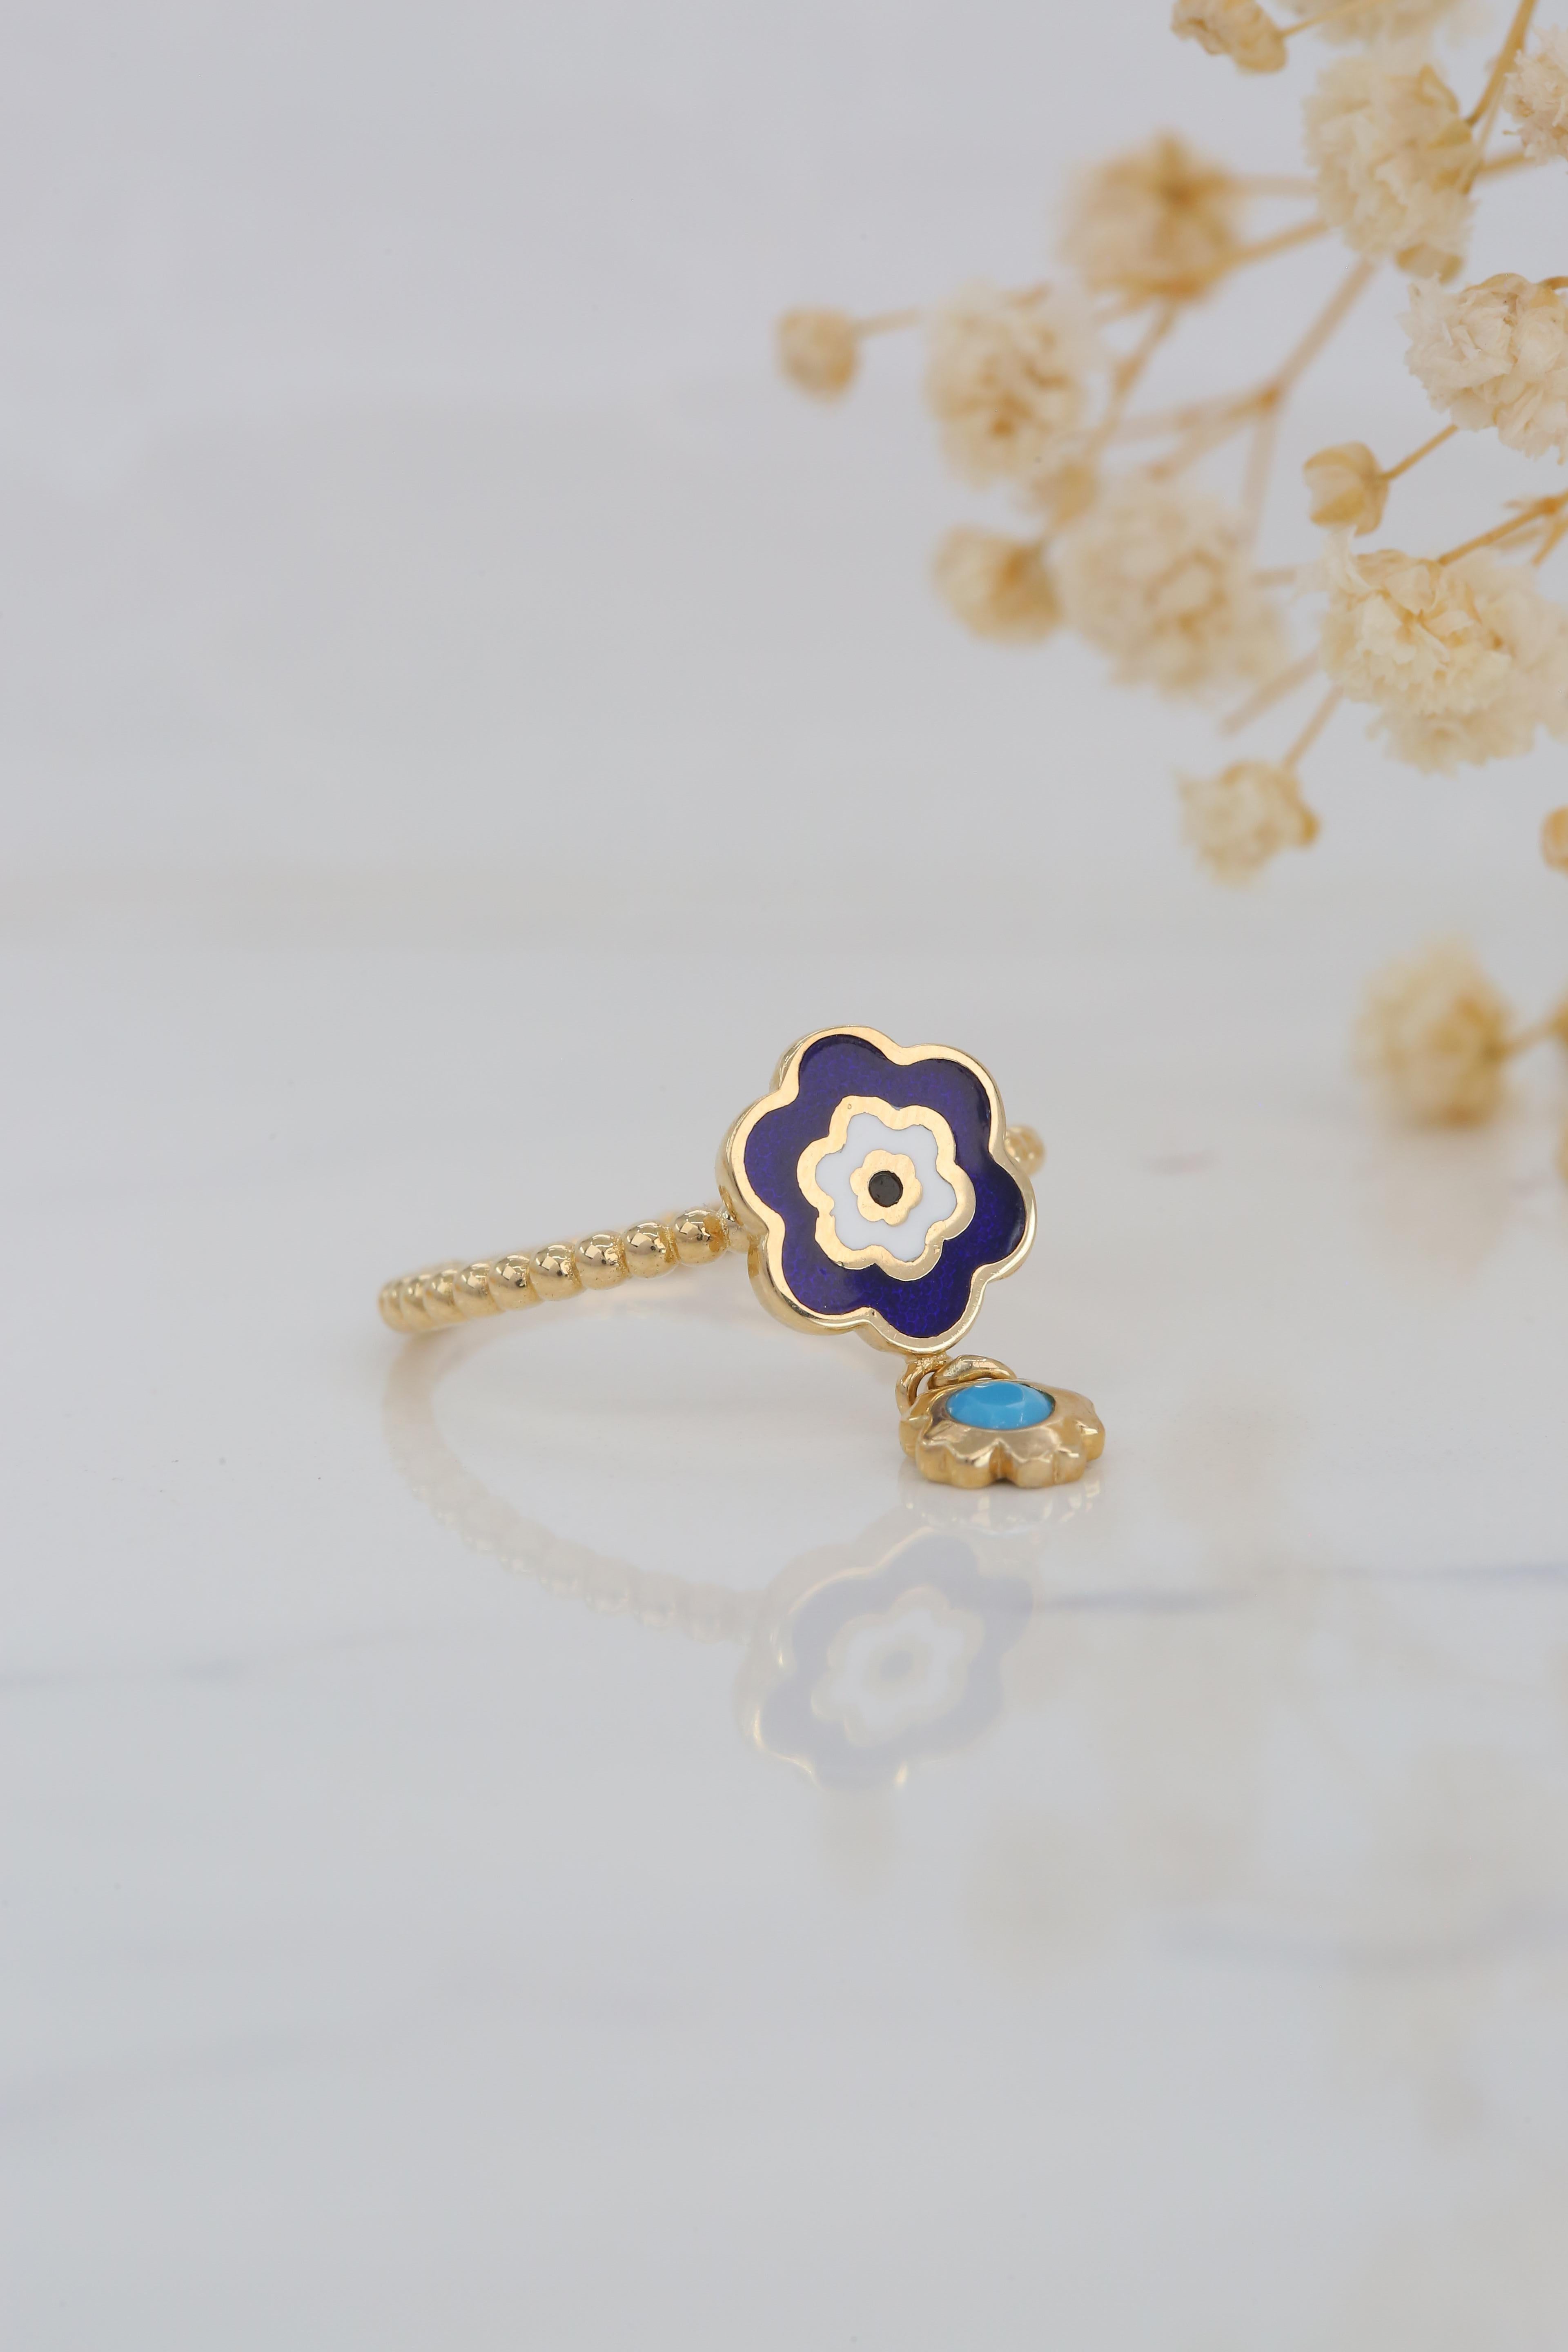 14K Gold Daisy Enamel Ring with Turquoise Pendant 3